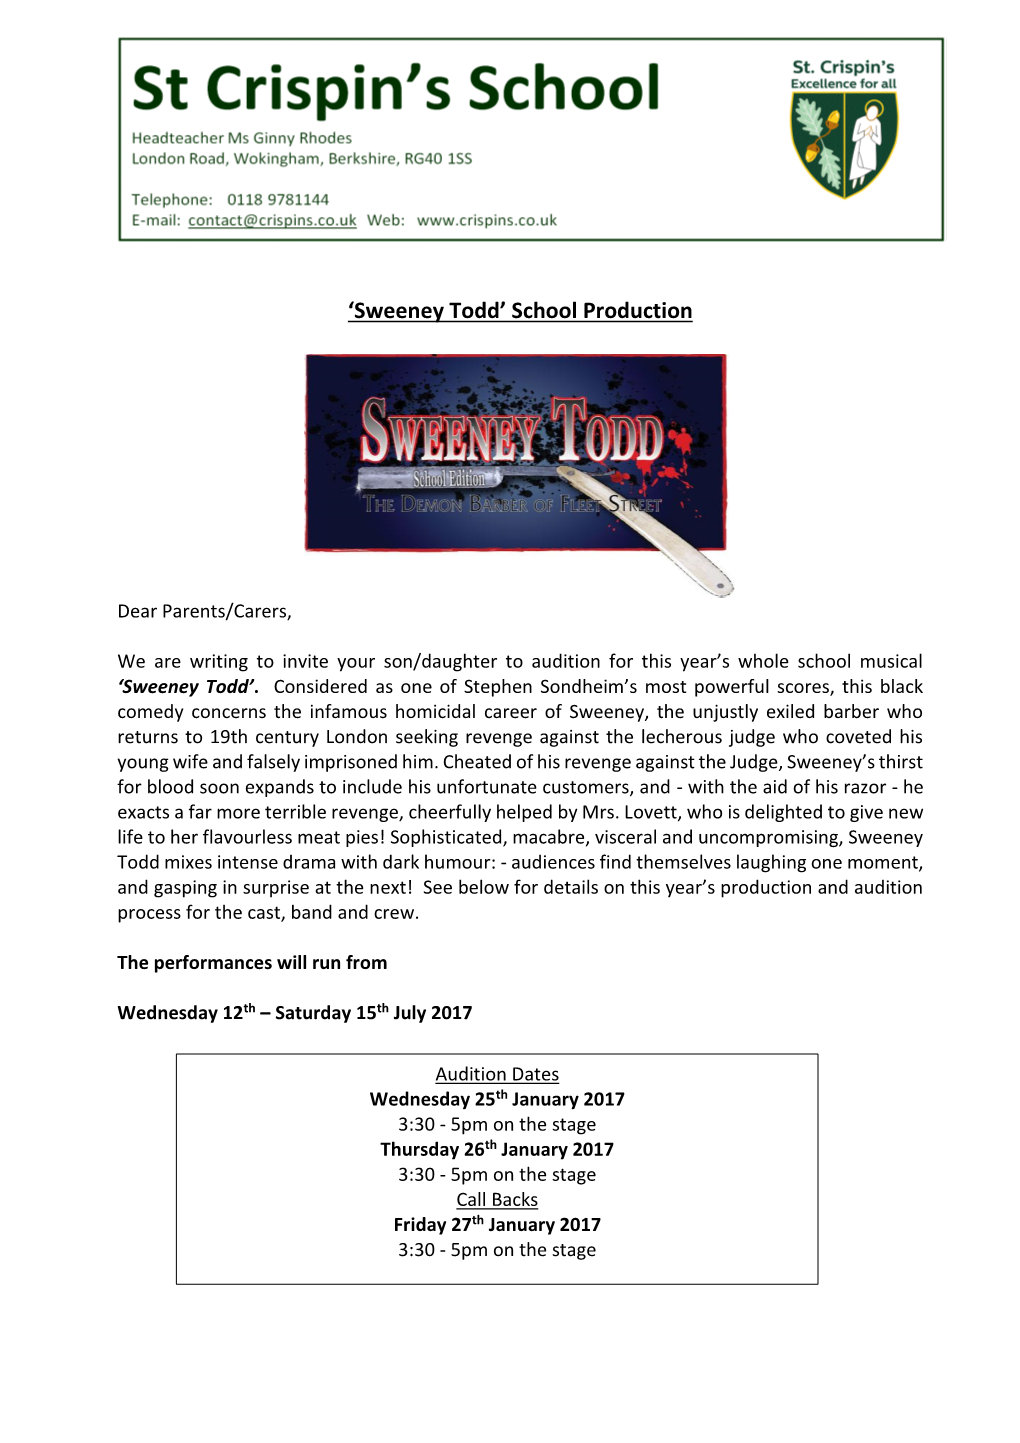 Sweeney Todd’ School Production